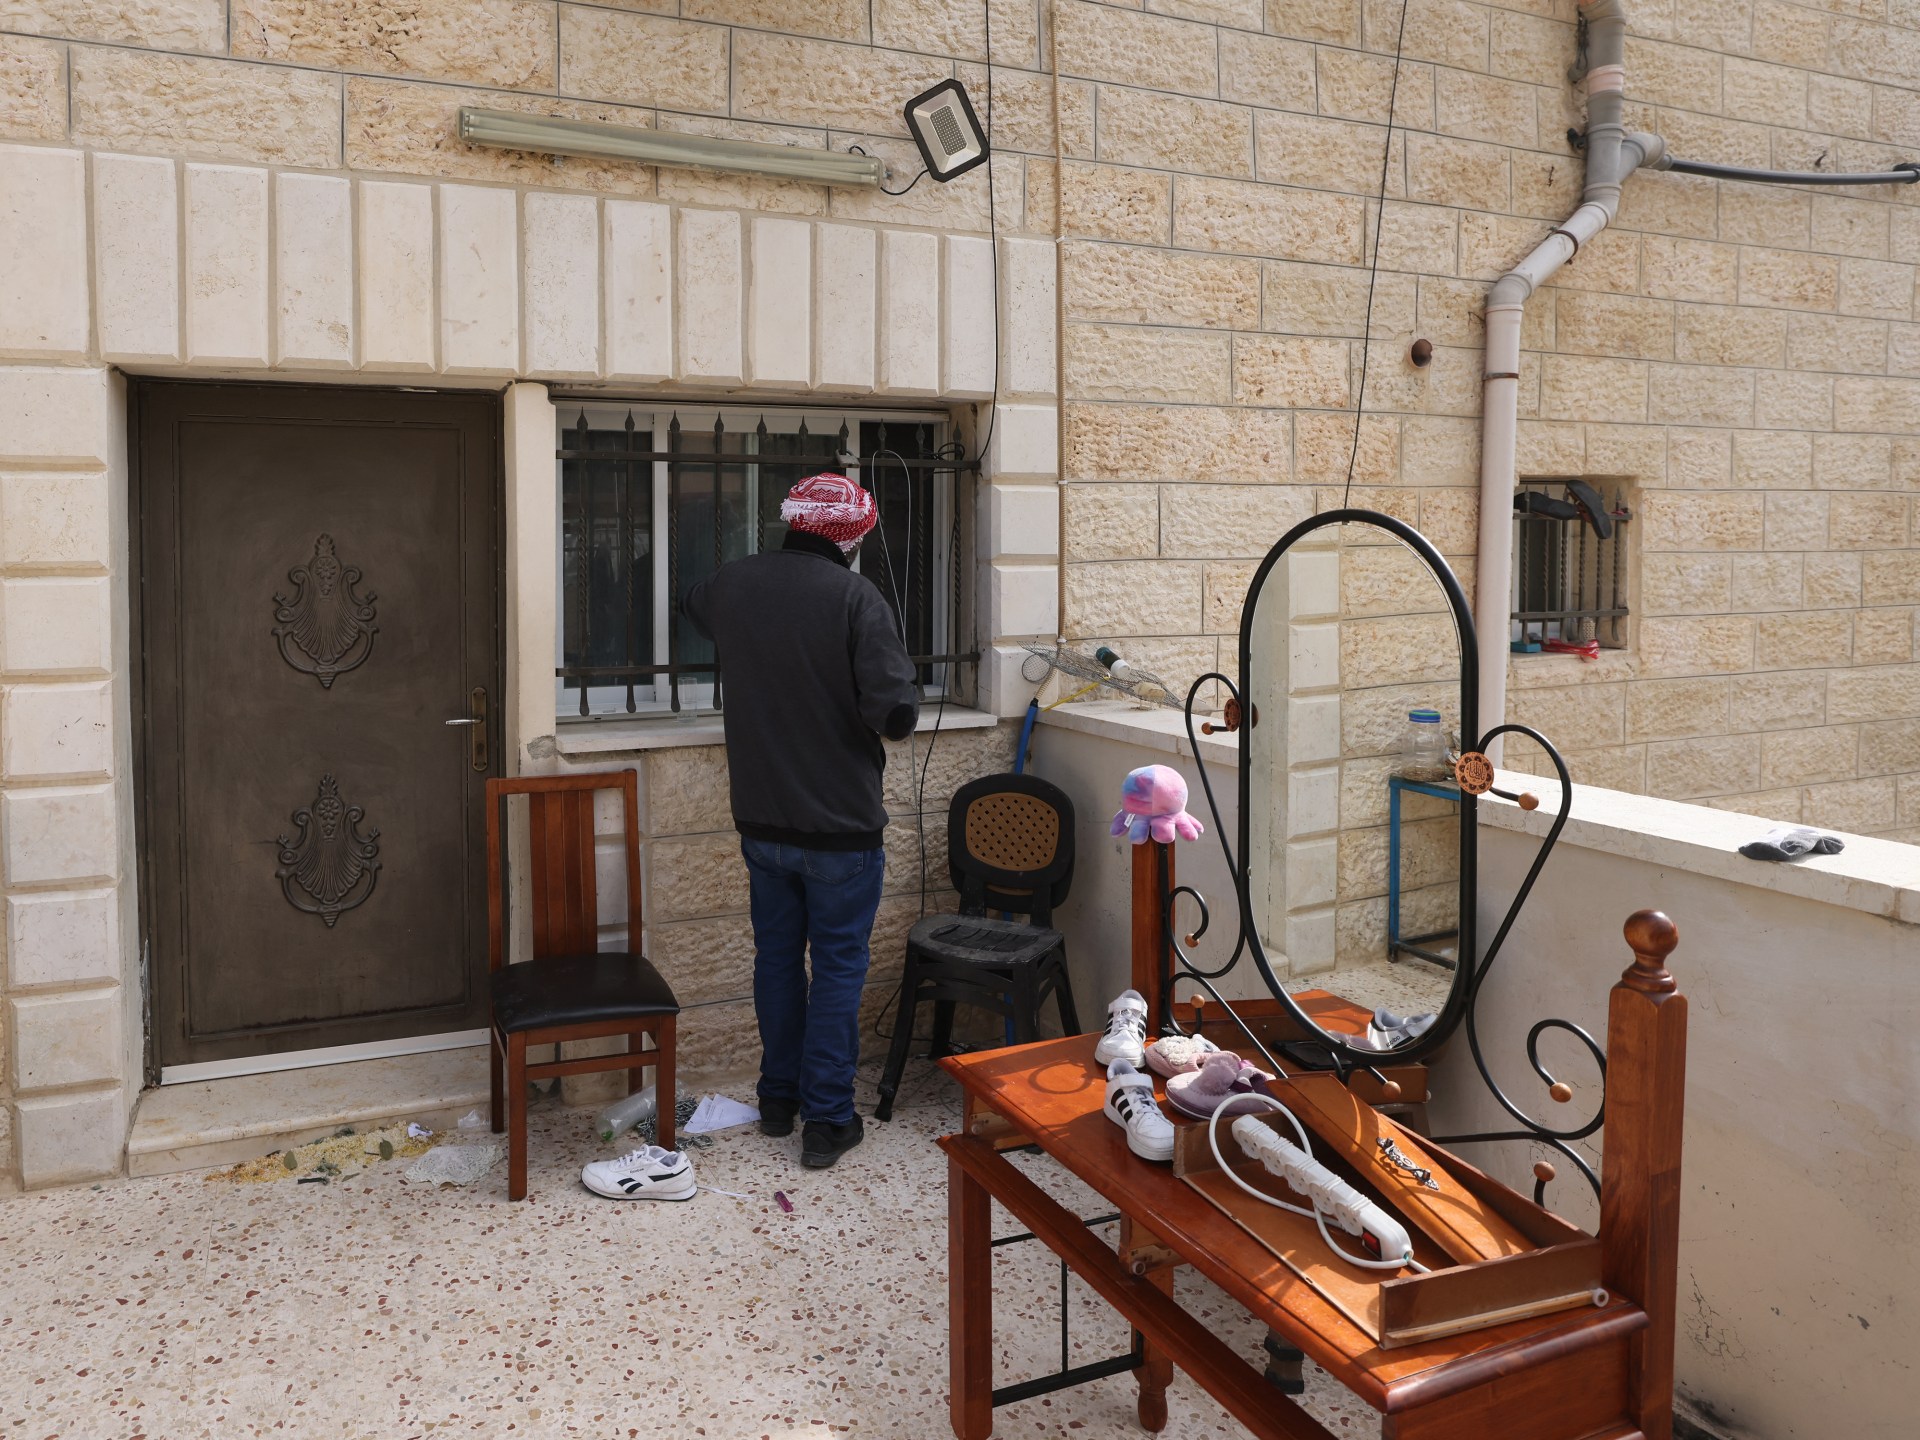 Israel prepares to demolish family home of Palestinian gunman